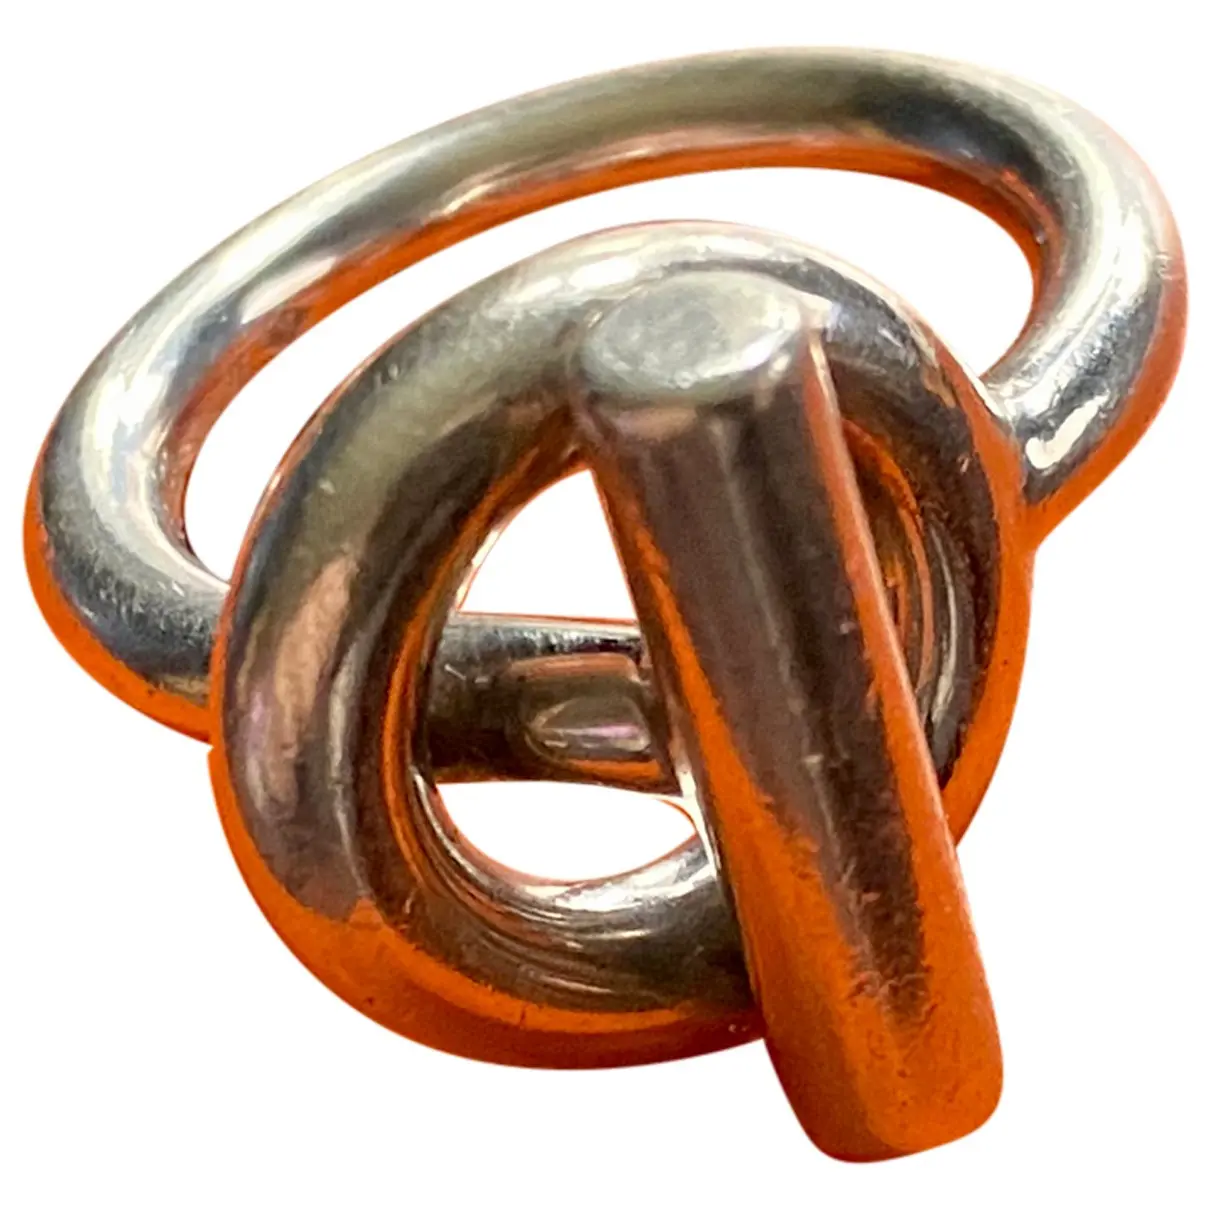 Croisette silver ring